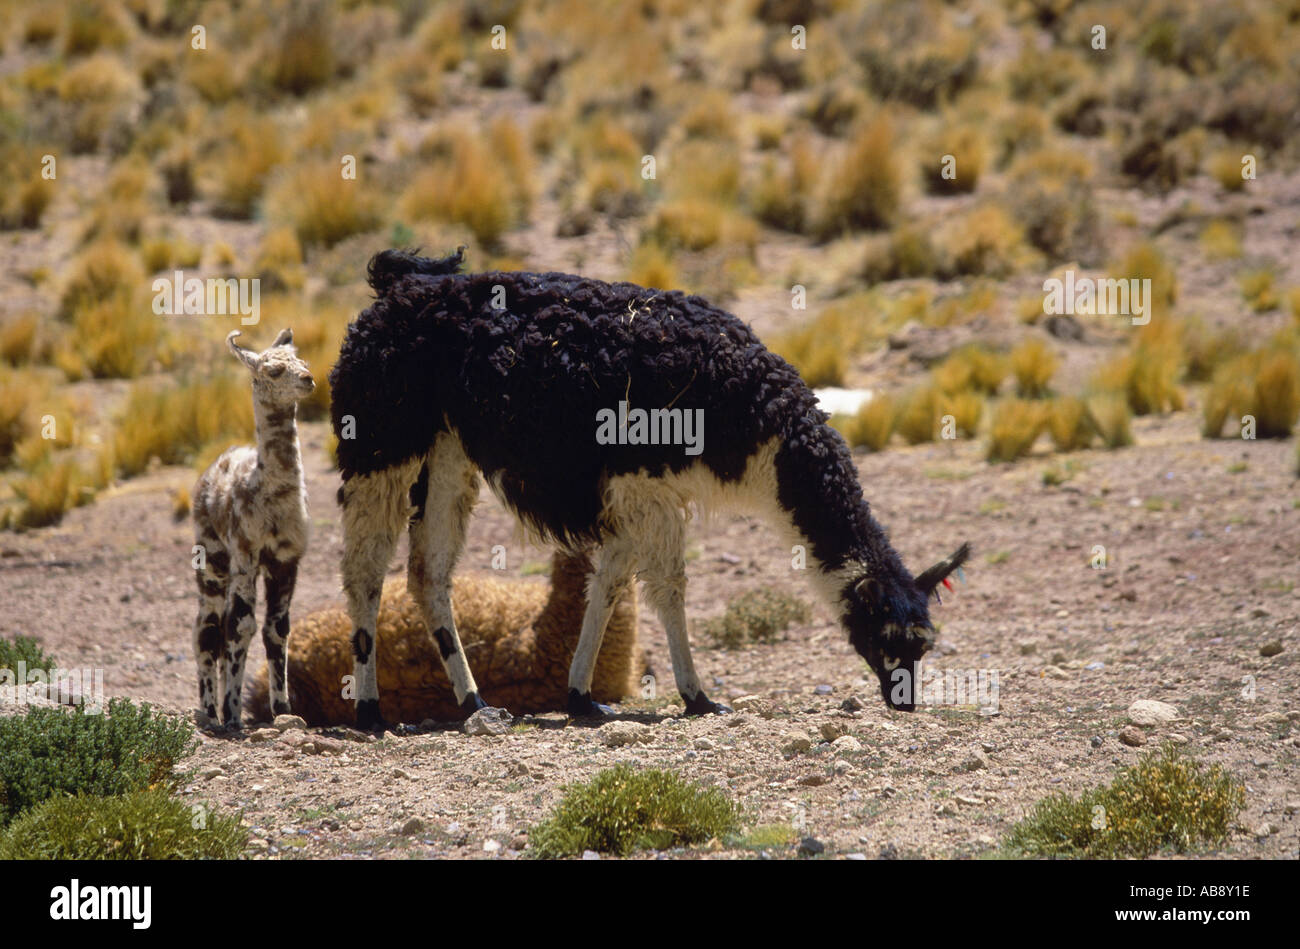 llama (Lama glama), grazing Llama with young stock, Chile, Region II, Salar de Atacama, Mrz 05. Stock Photo